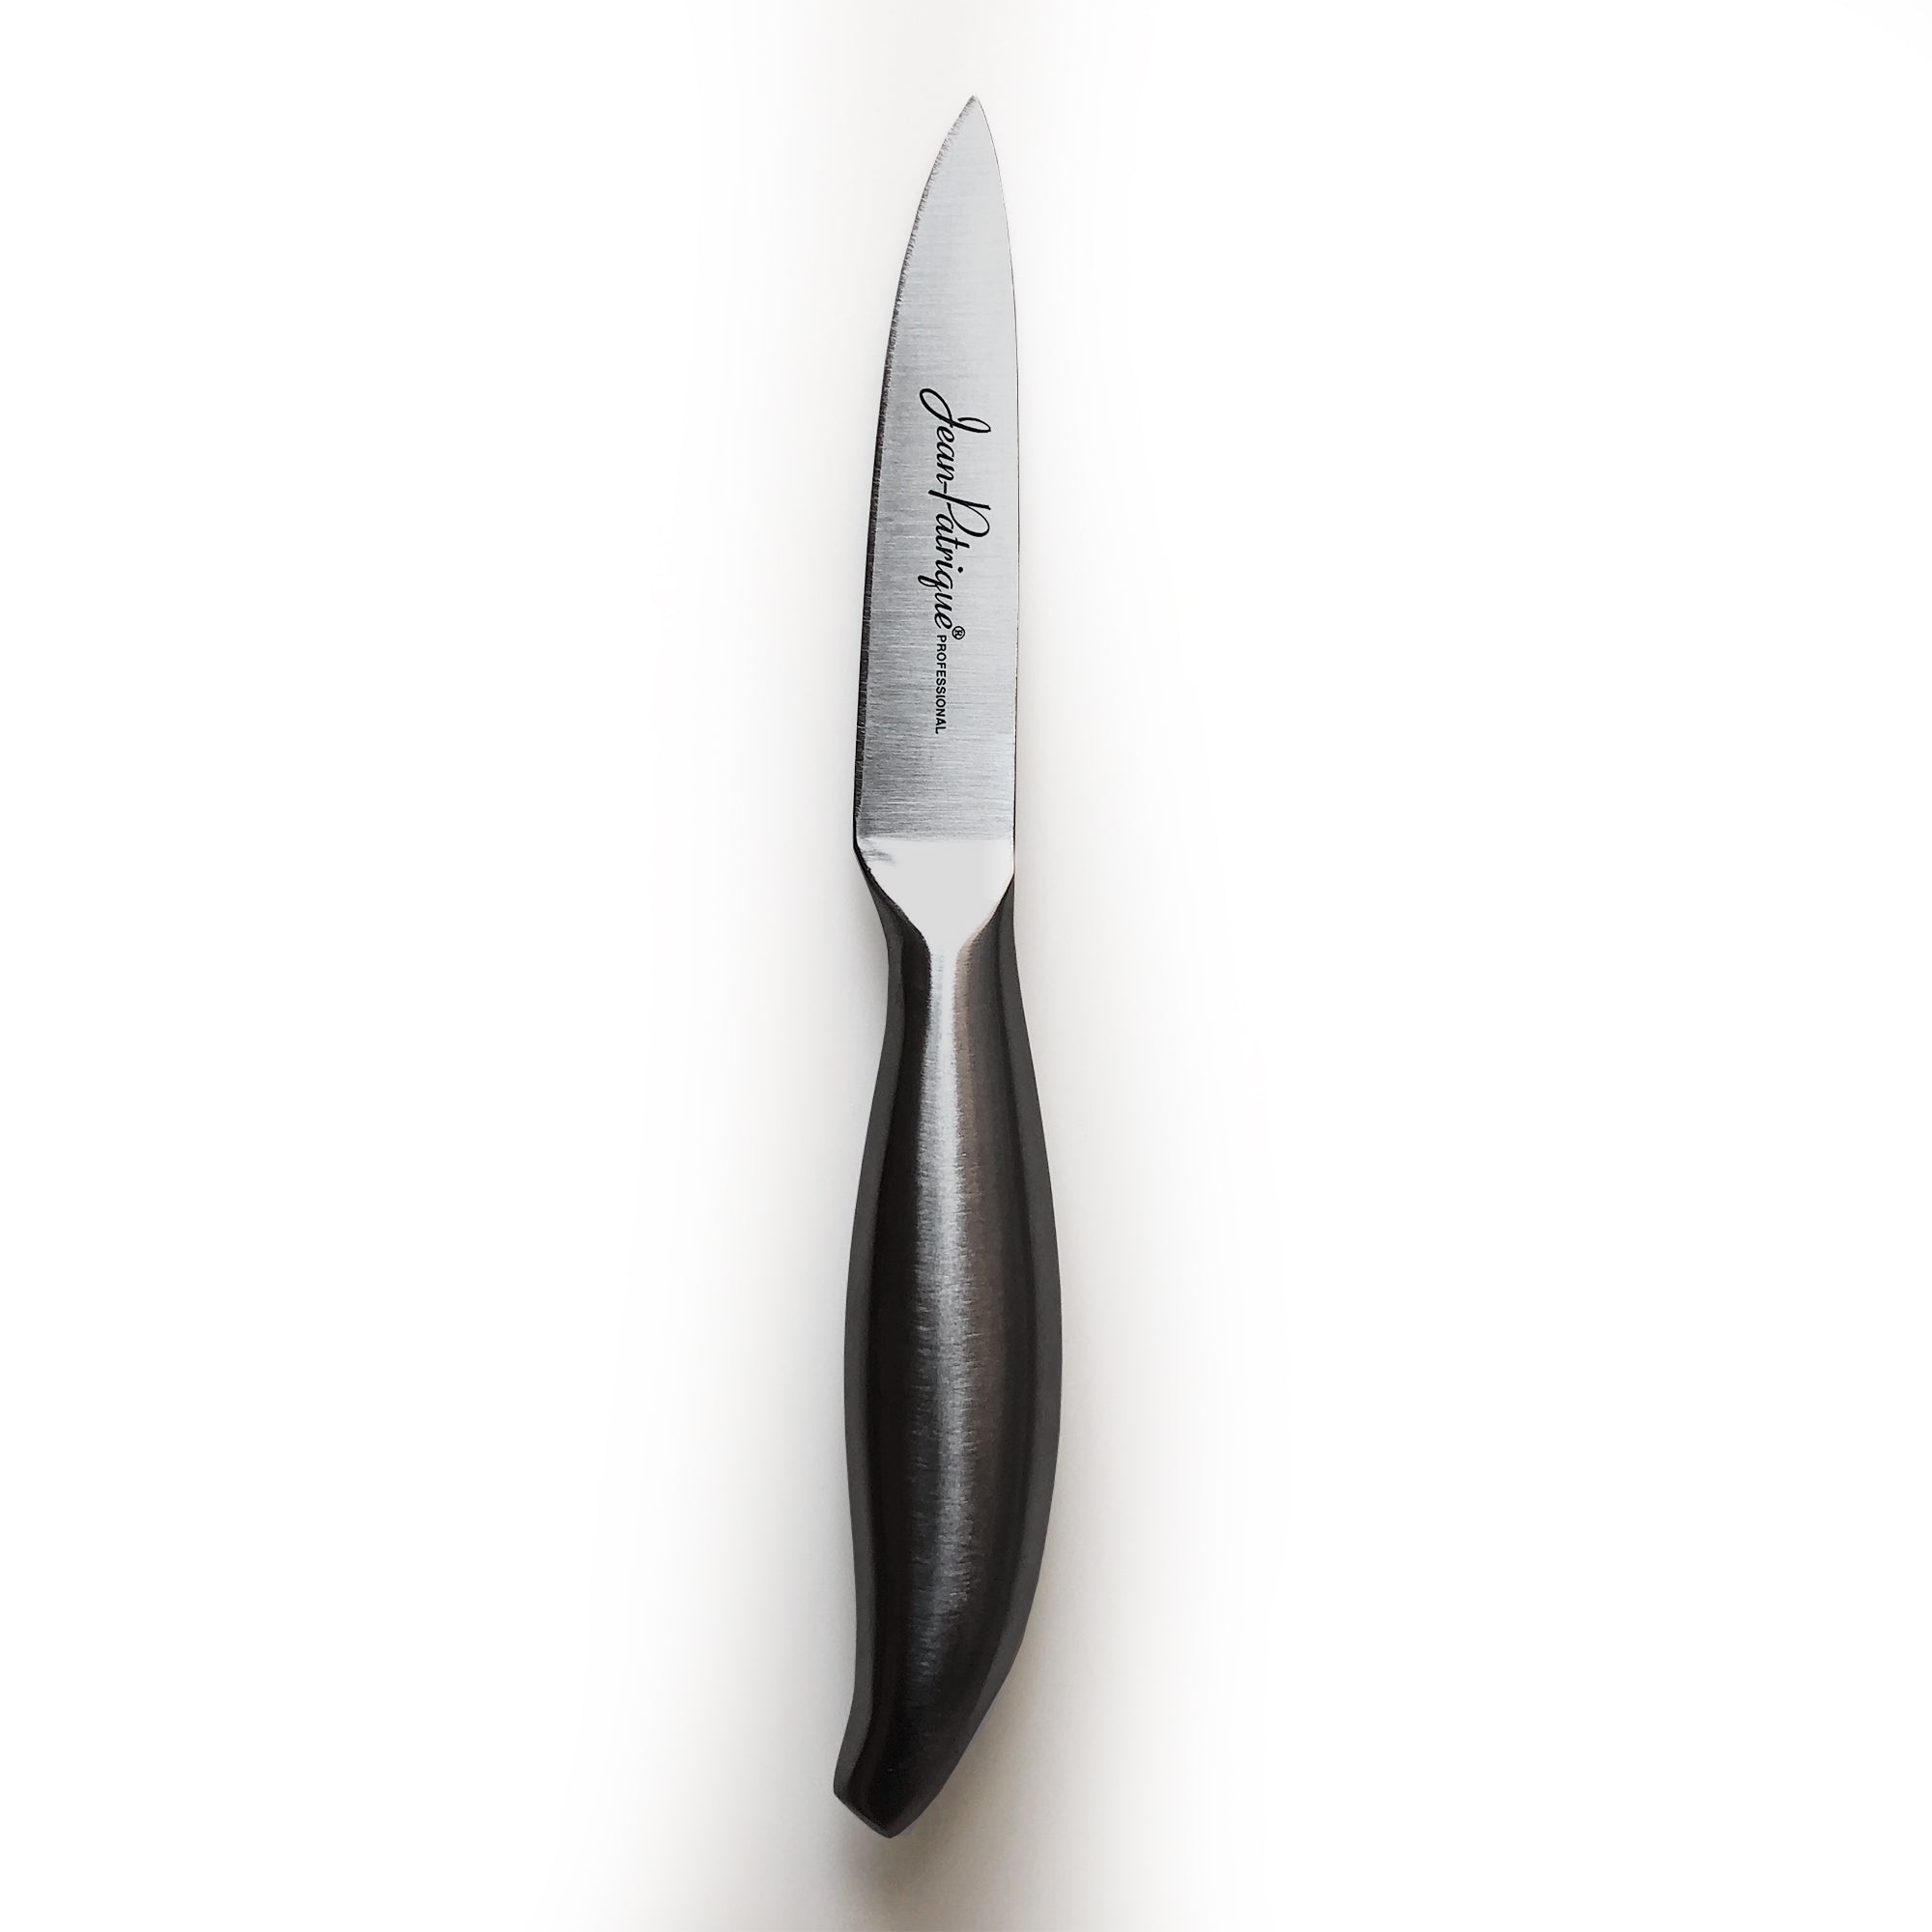 Chopaholic Paring Knife - 3.5 Inch